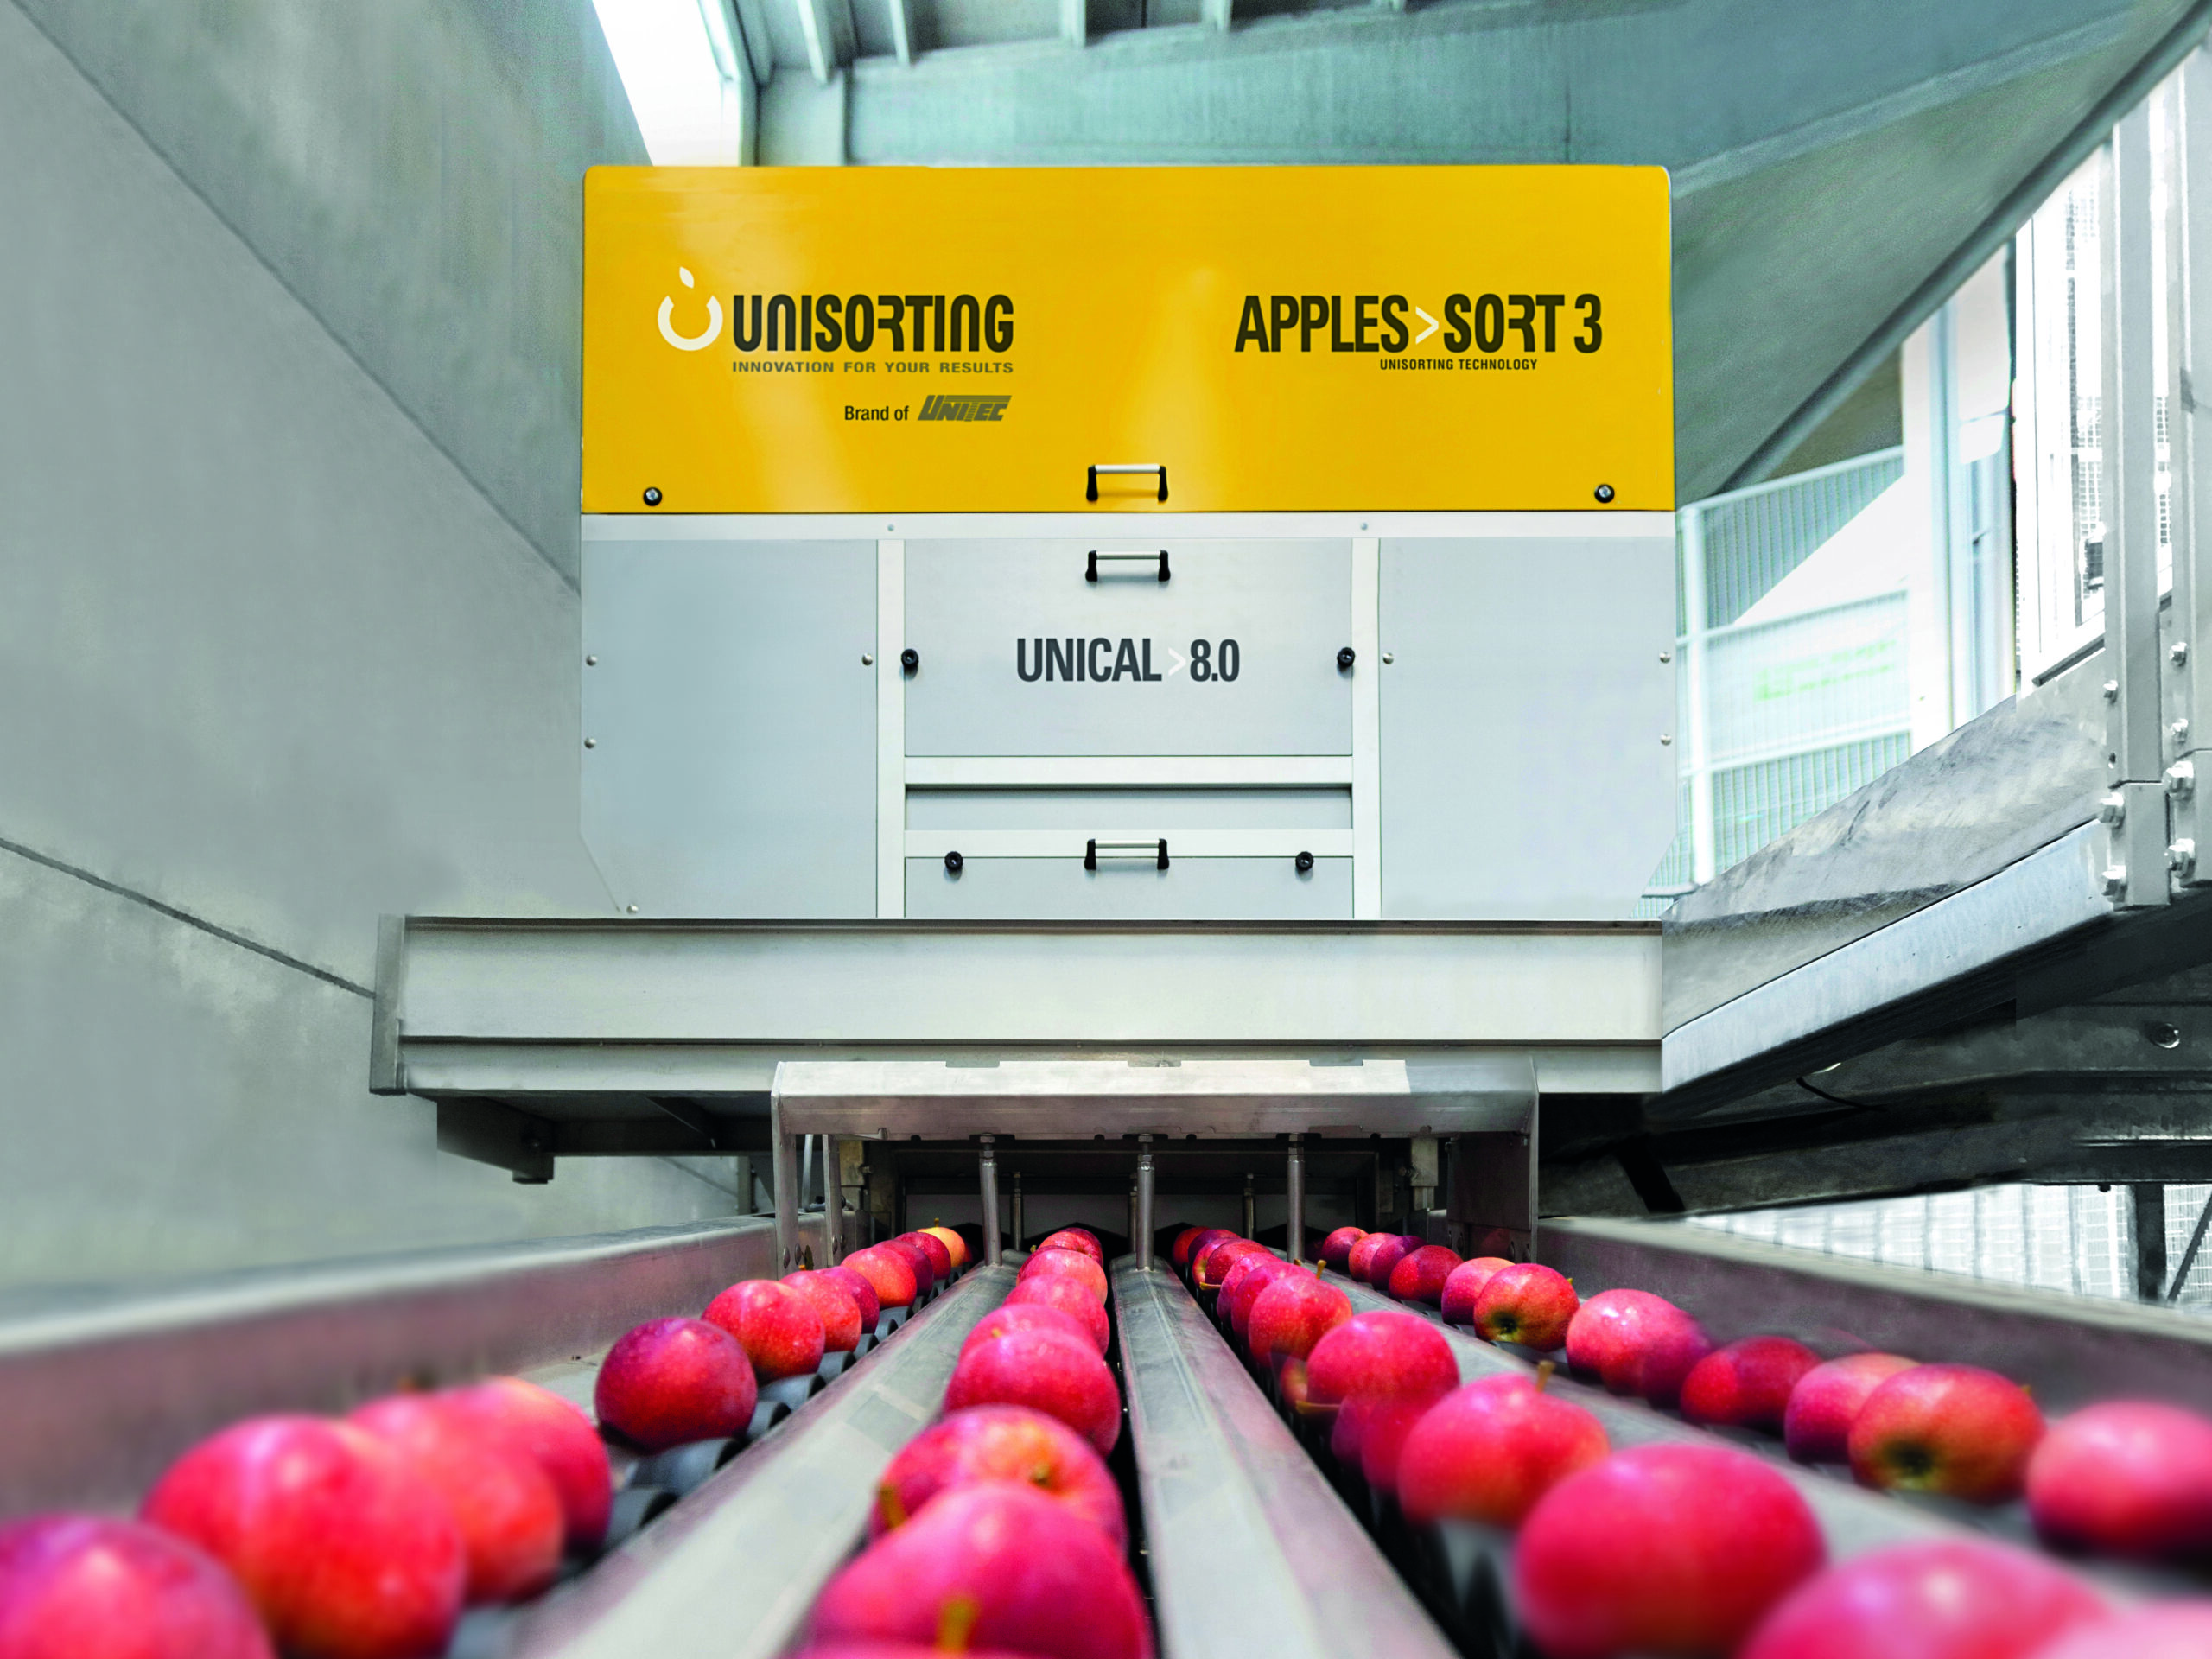 Unisorting Technologien "Apples sort" für Äpfel